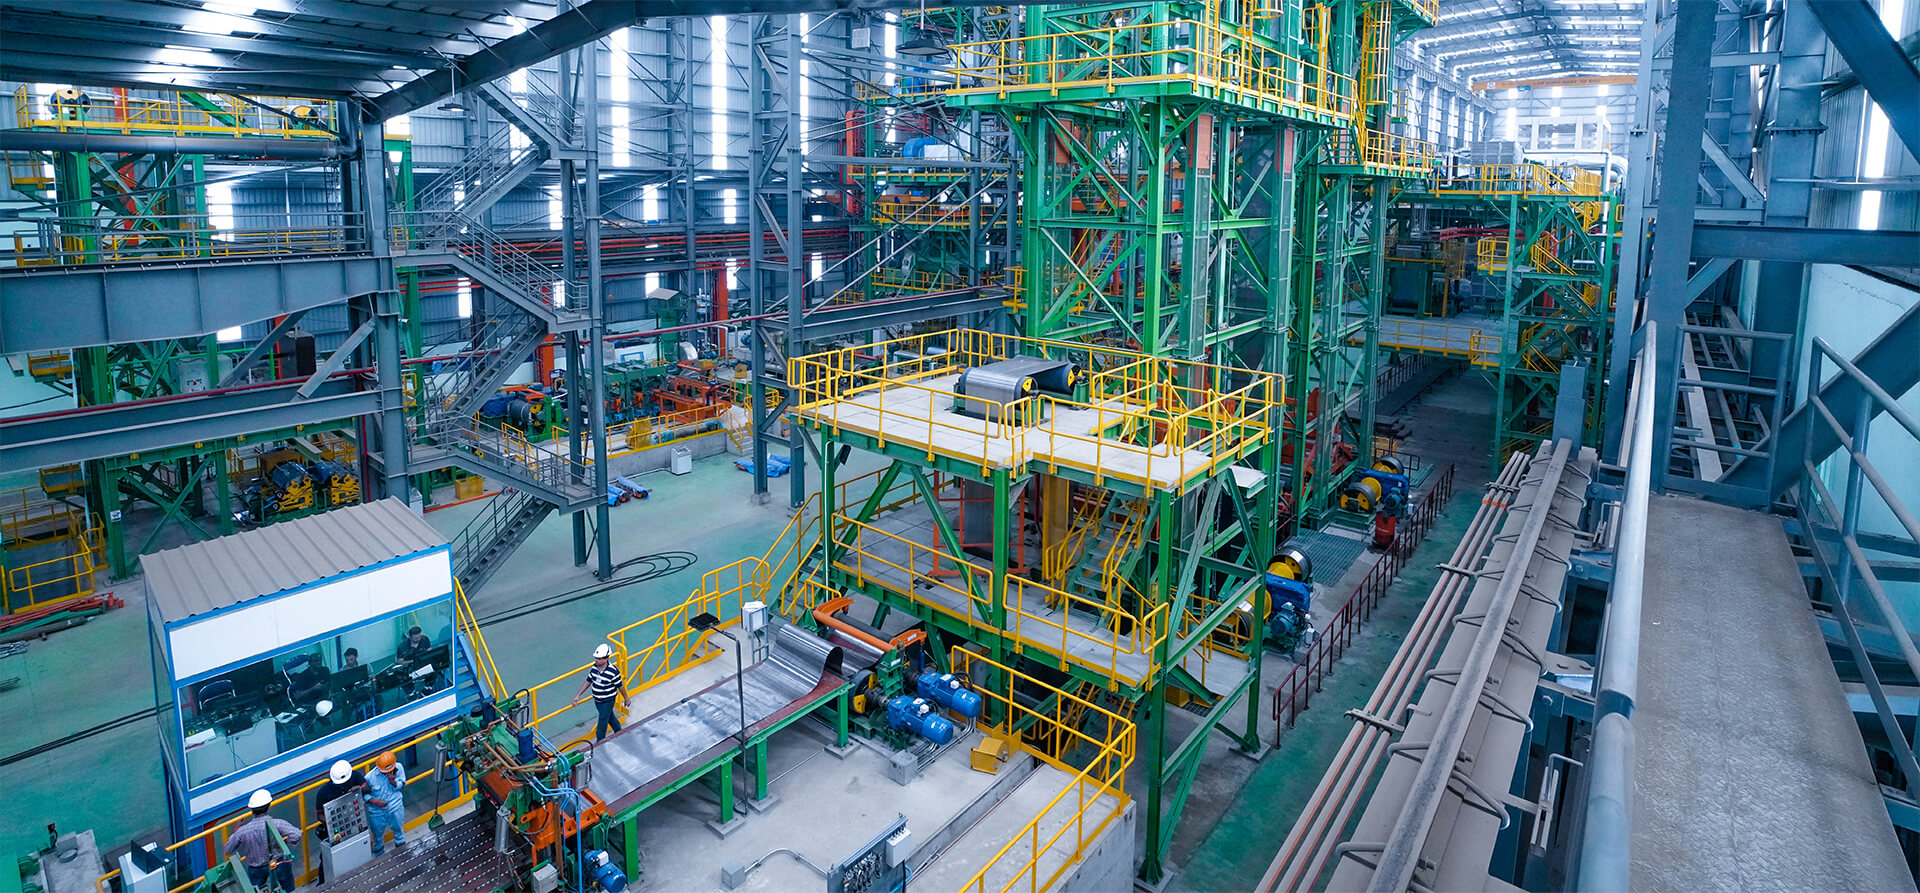 Pomina Coated Steel Manufacturer In Vietnam